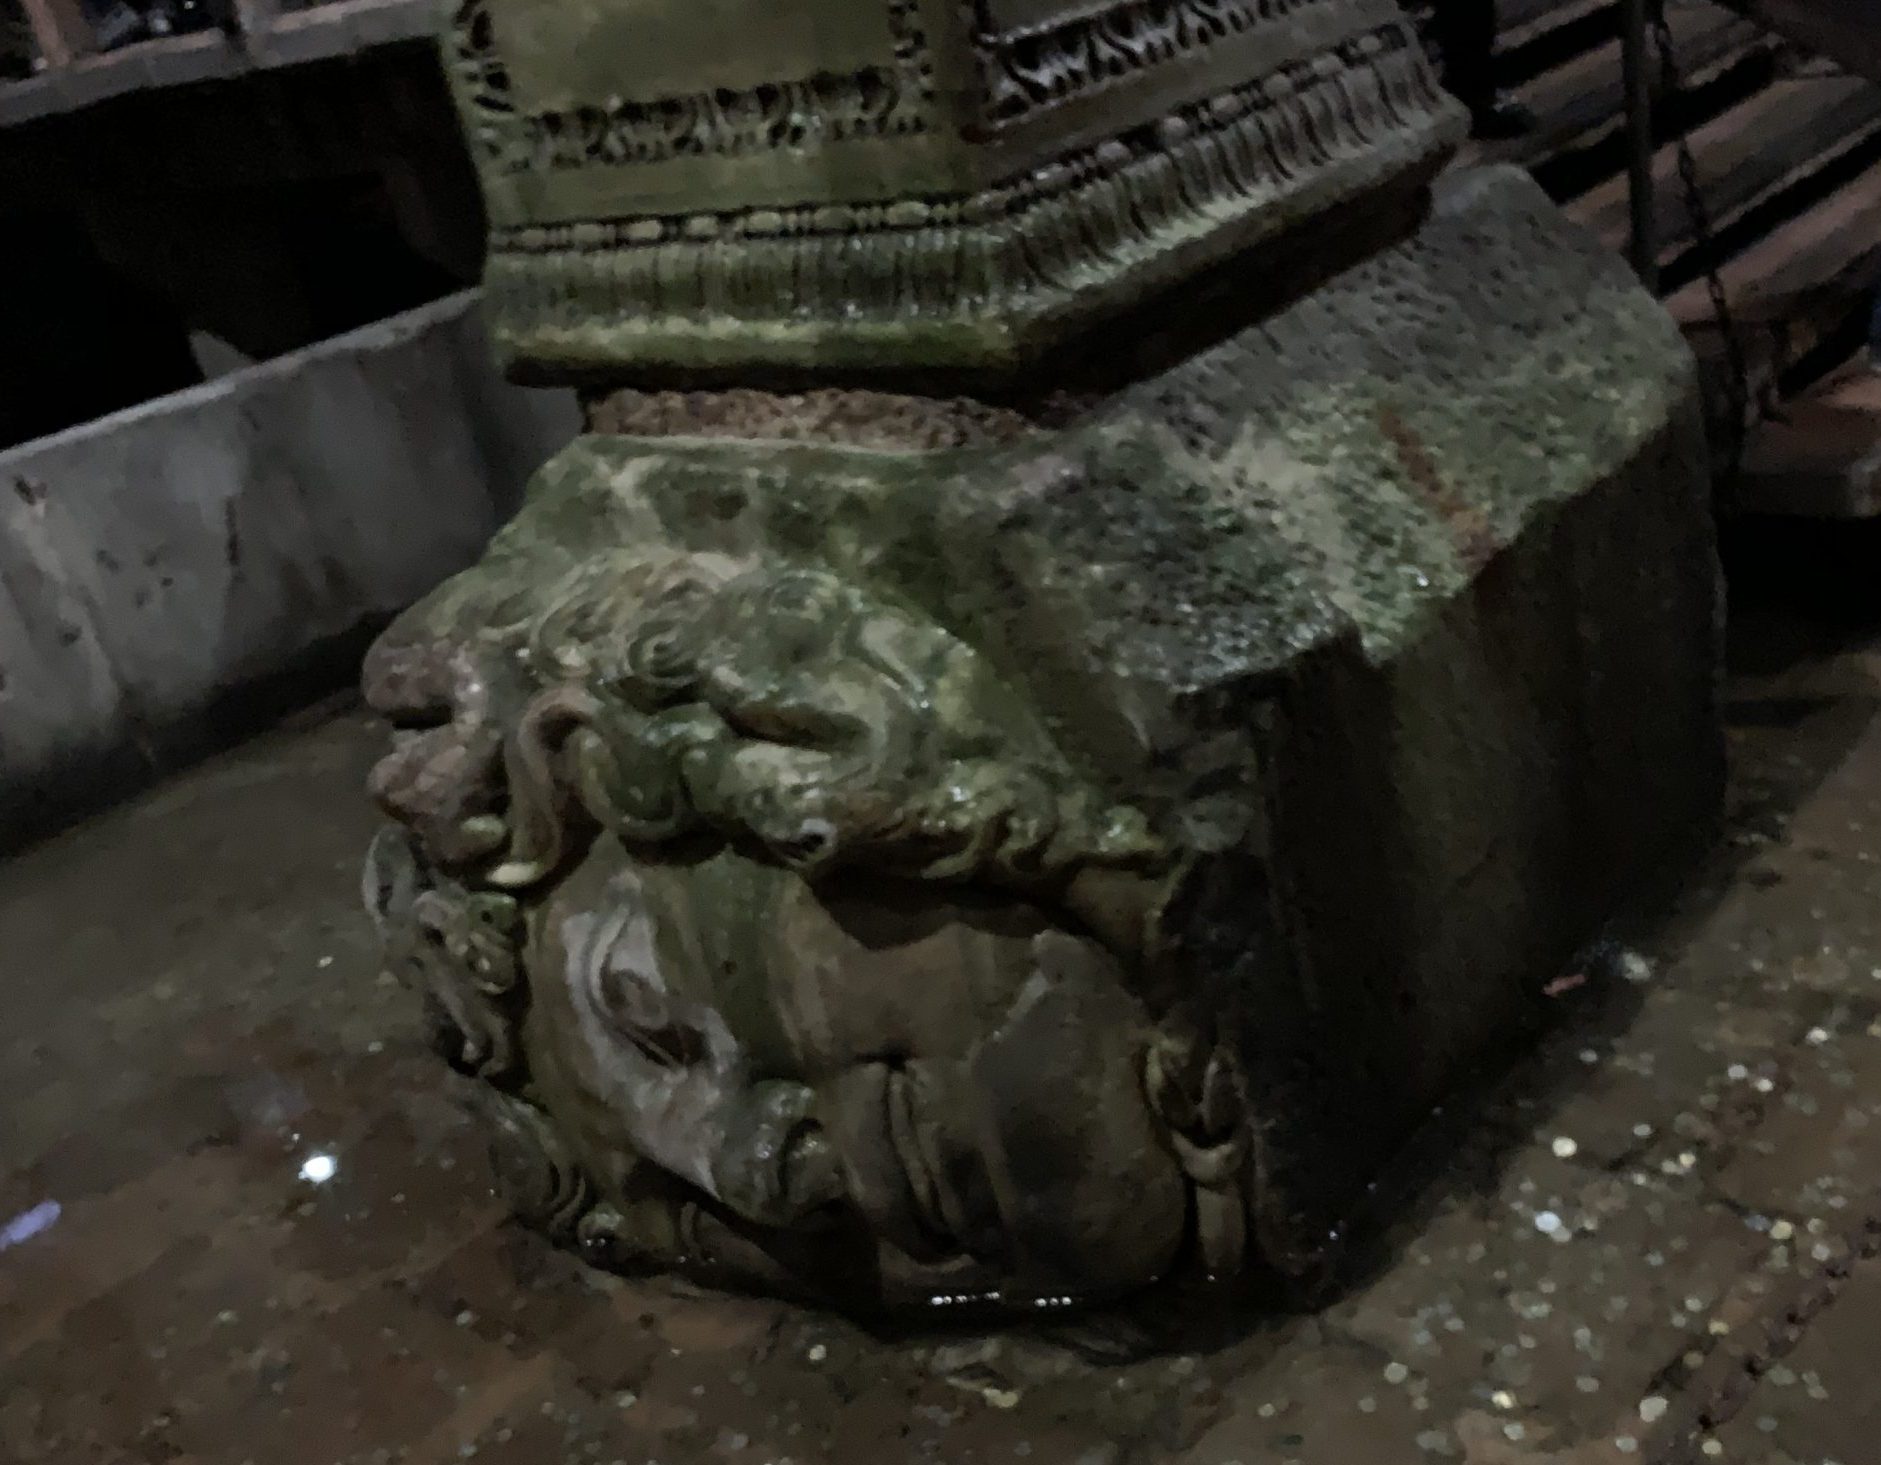 sideways stone Medusa head with a pillar on top